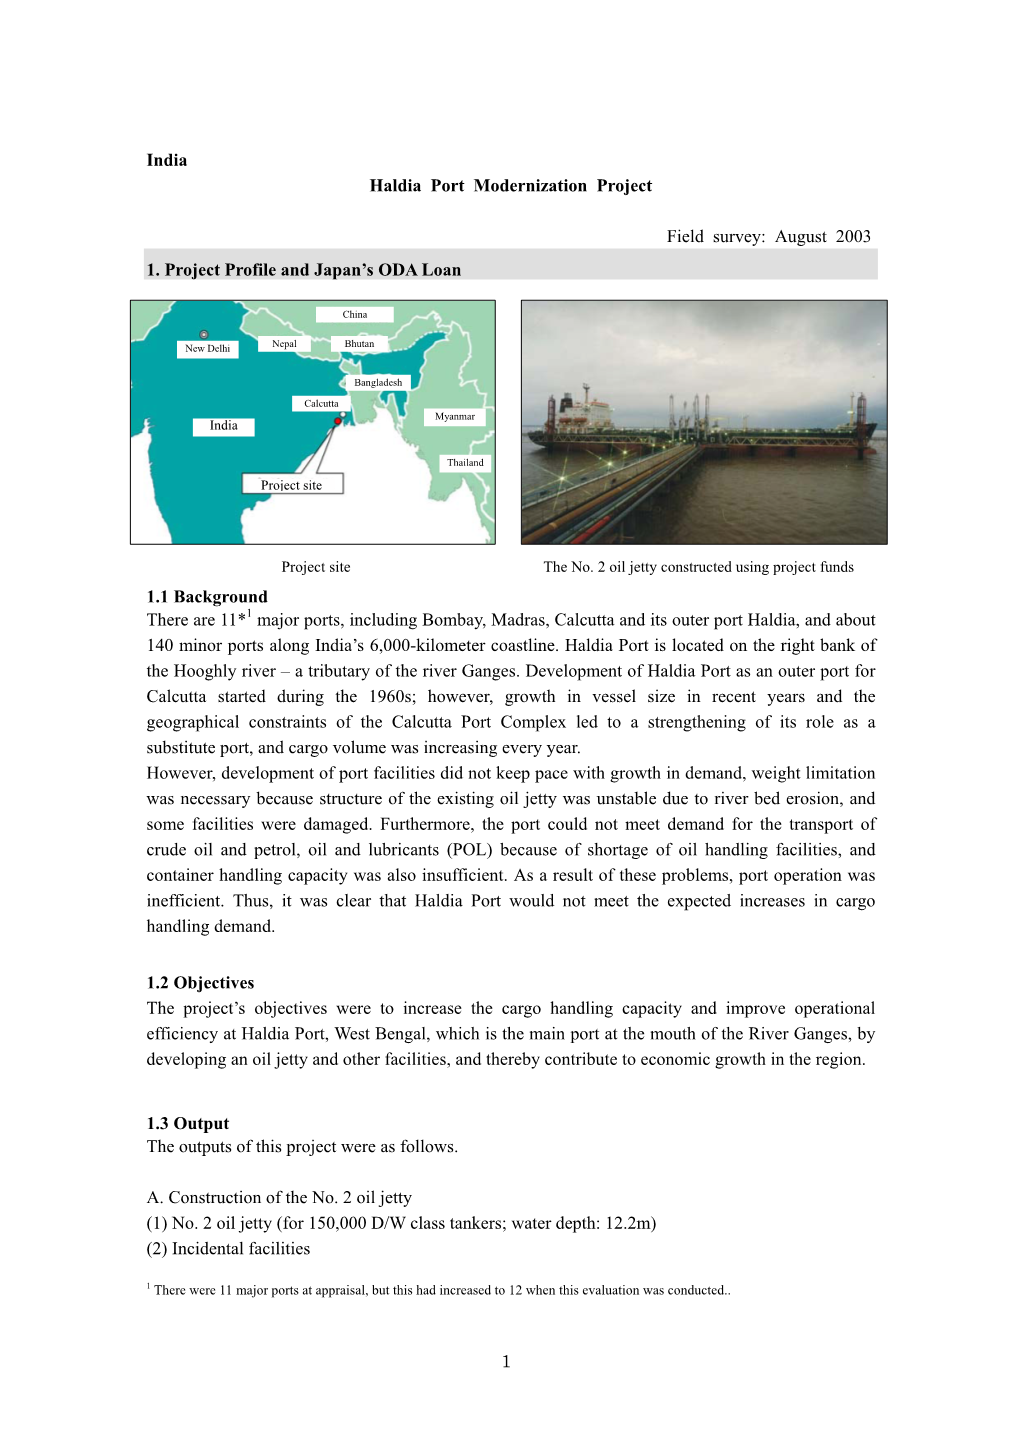 India Haldia Port Modernization Project Field Survey: August 2003 1